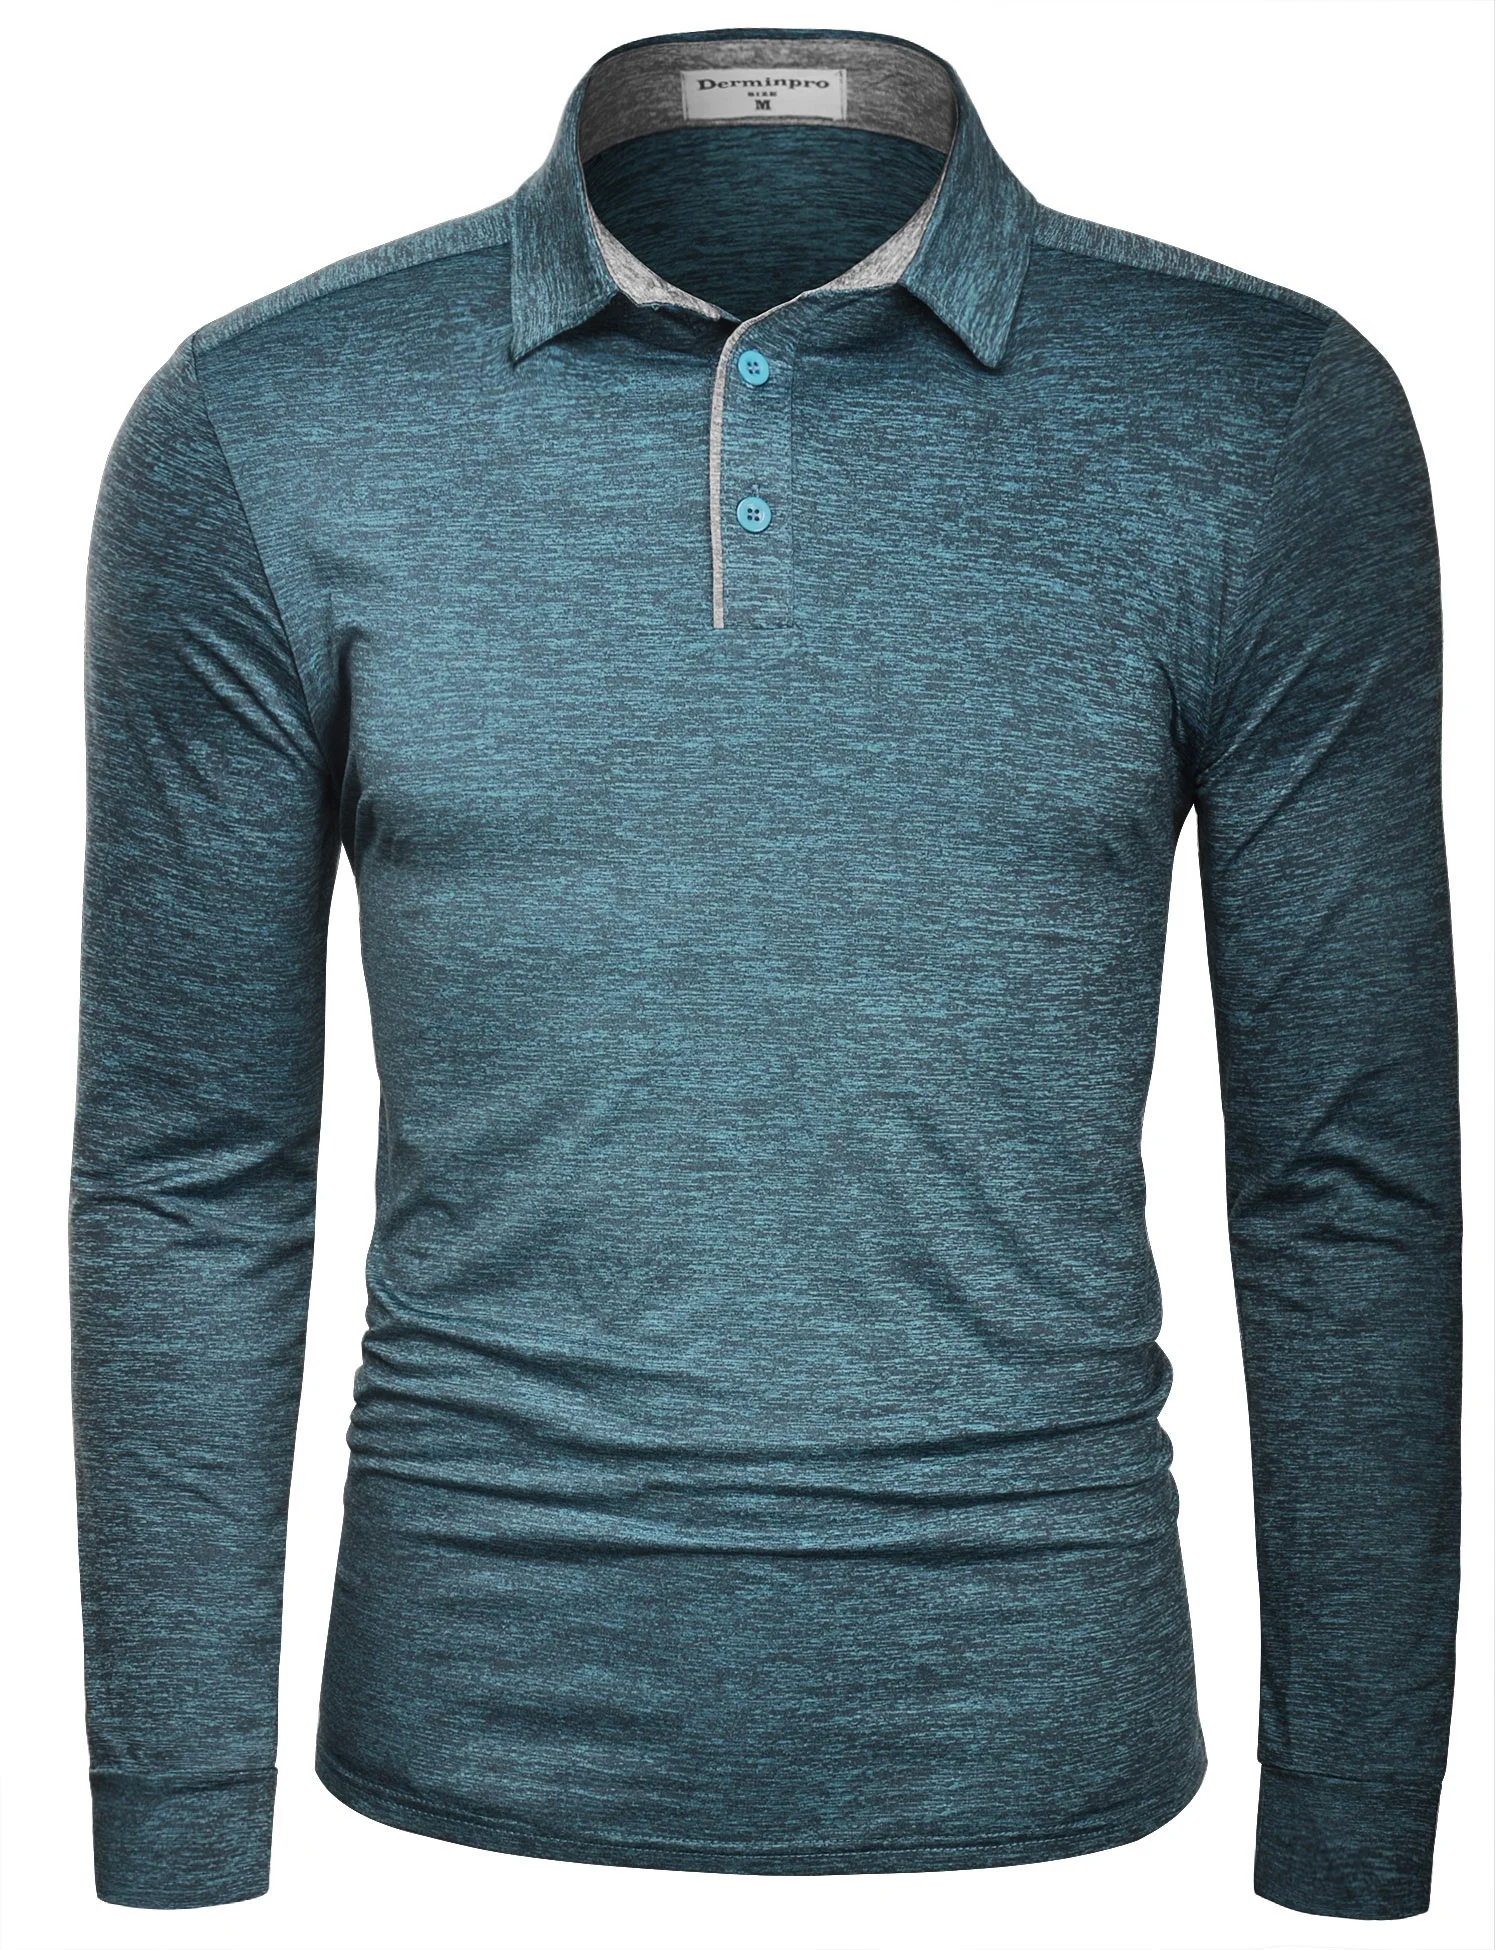 New Design Fashion Men's Apparel Clothing Button Full Sleeve Polo Tee Shirt